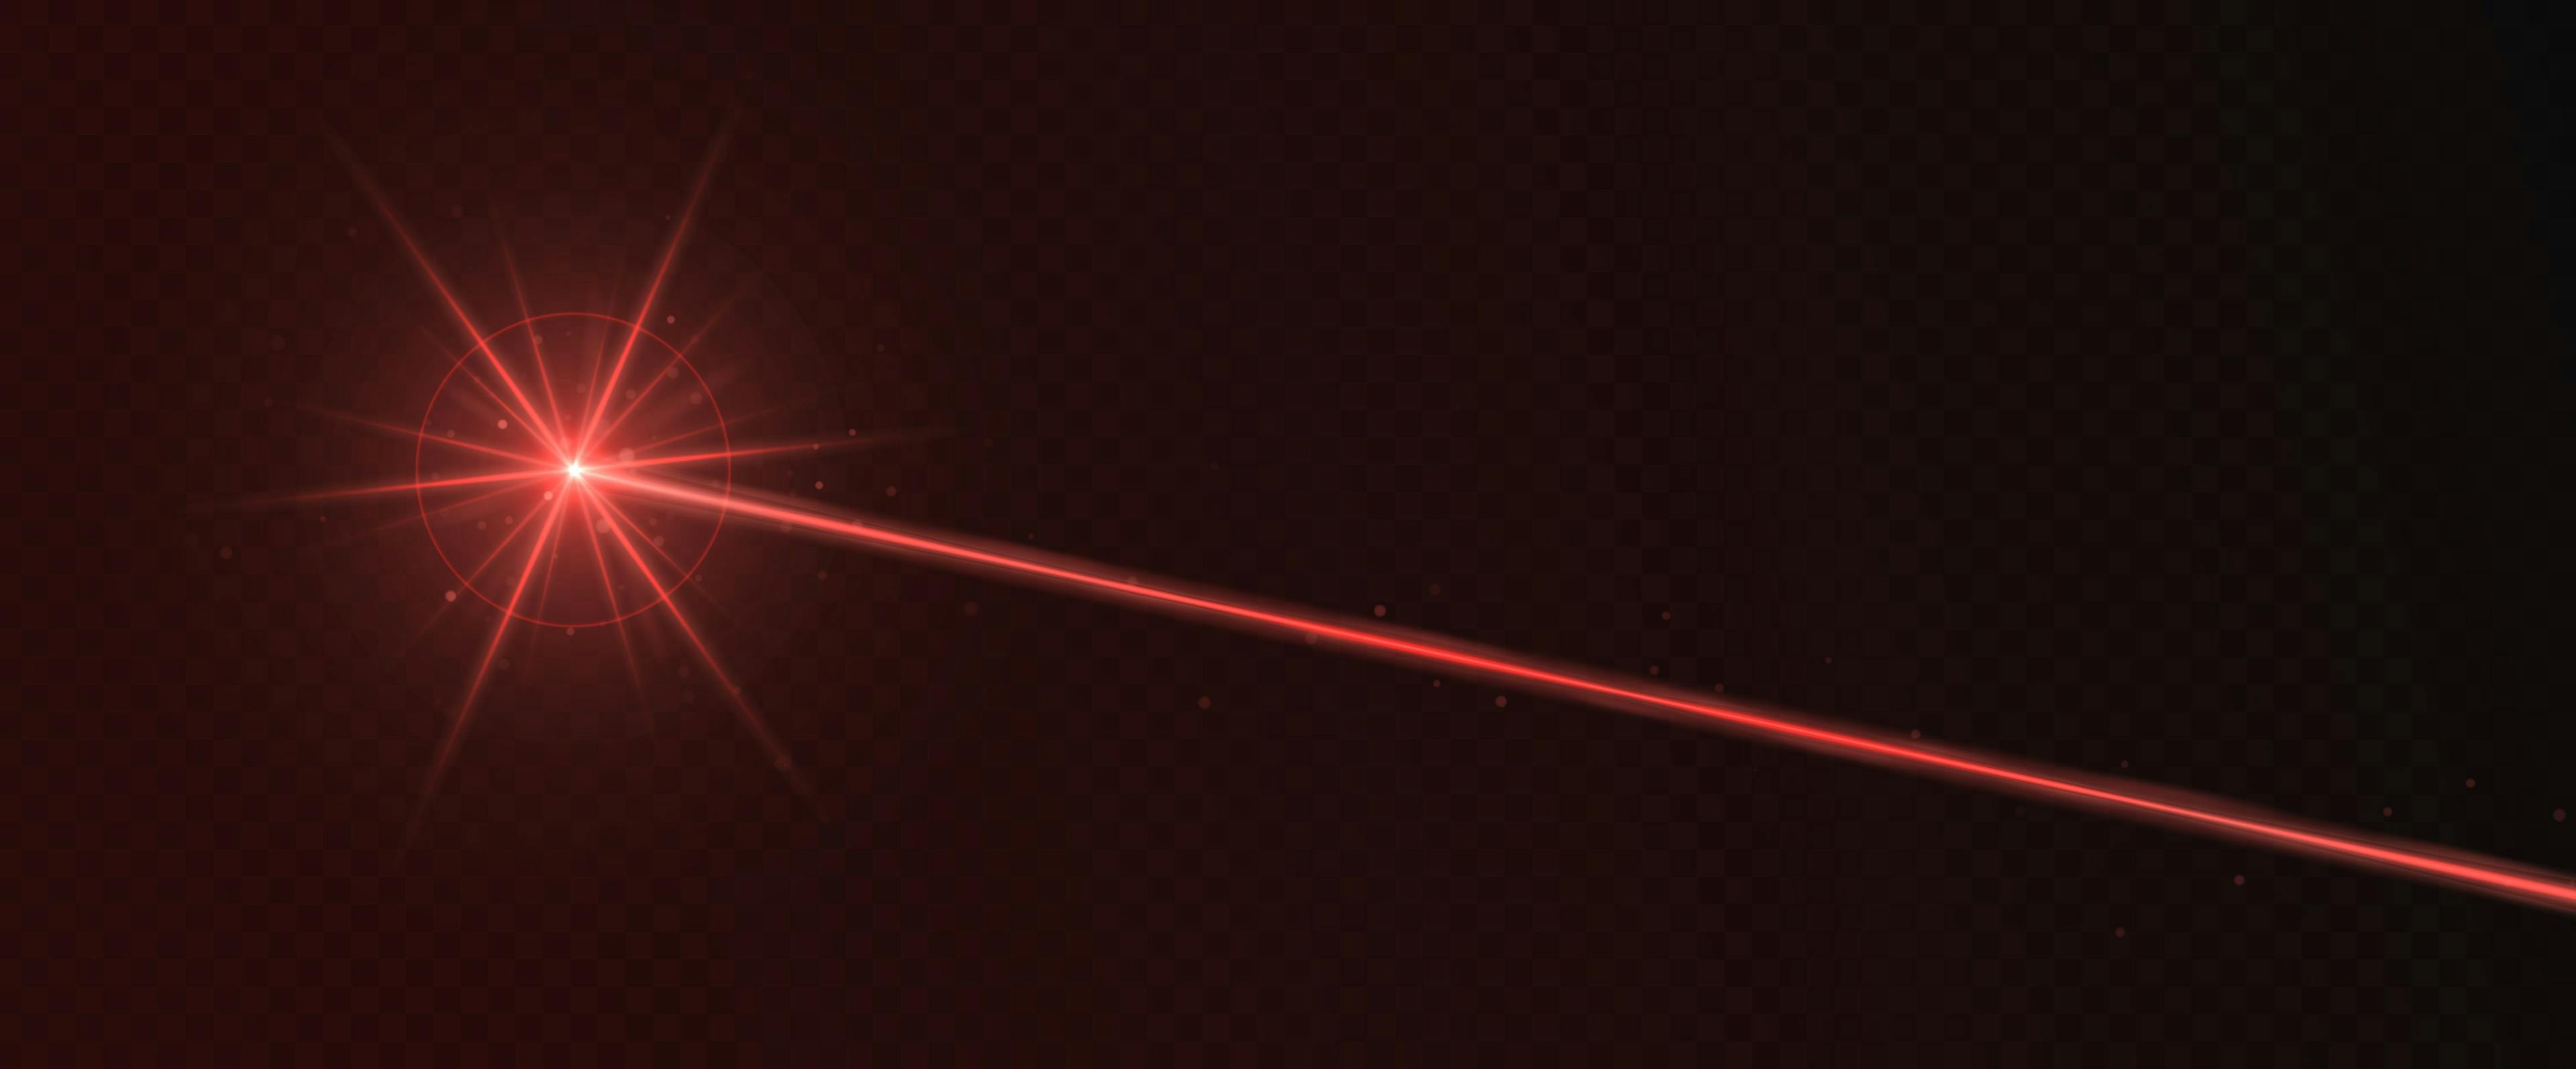 Red laser beam light effect isolated on transparent background. Neon light ray. | Image Credit: © Likanaris - stock.adobe.com